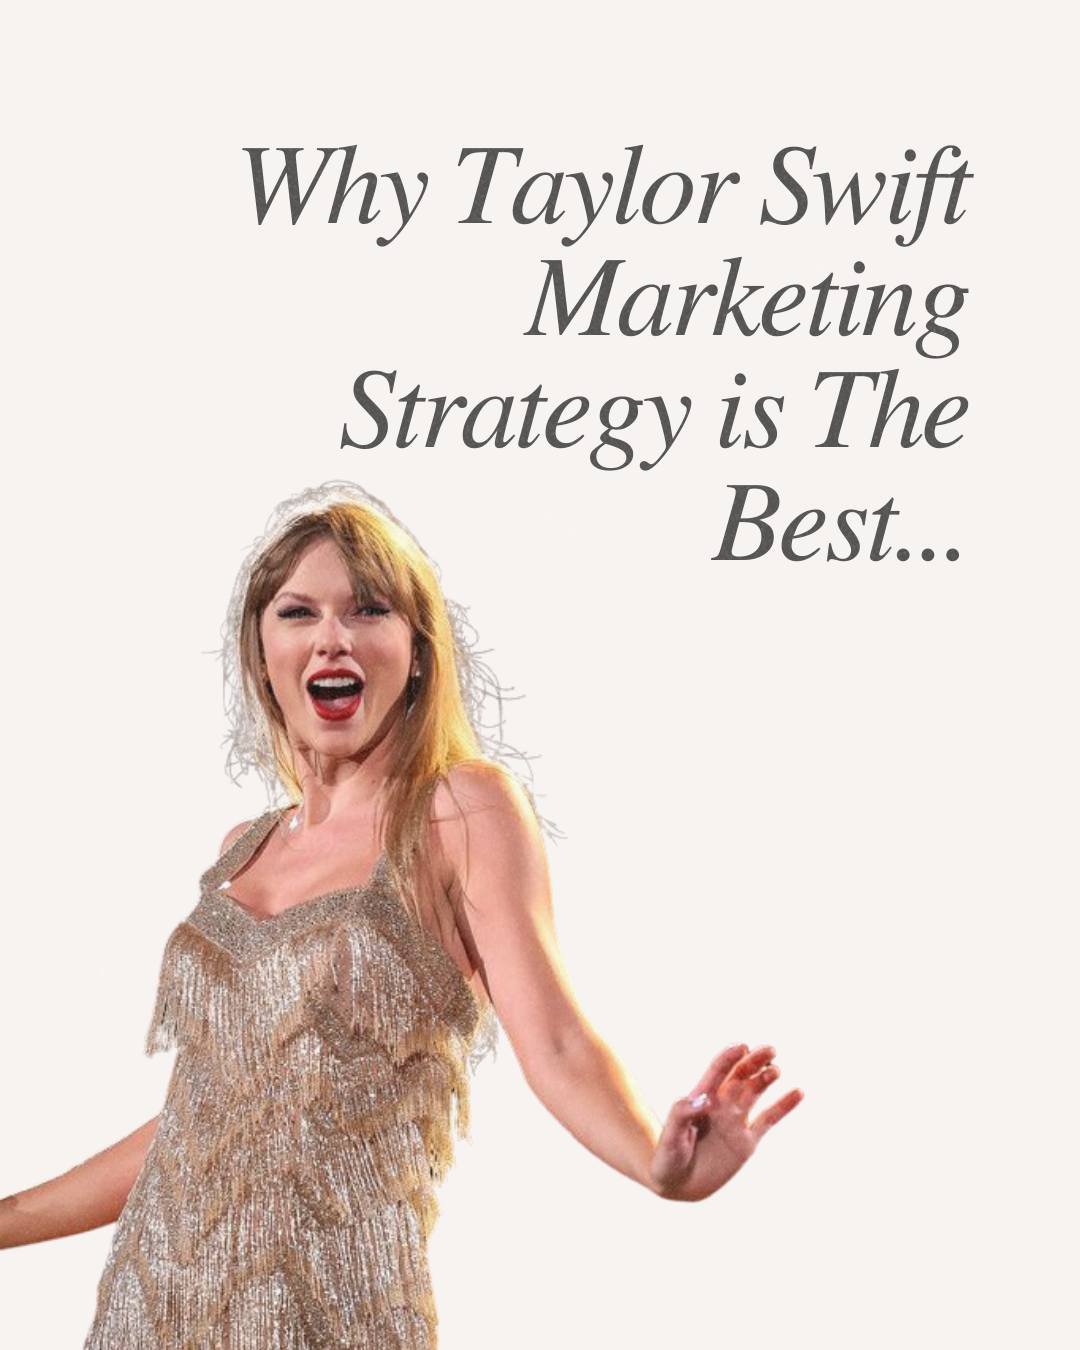 You can't blame why Swifties love her 💅✨

#marketingstrategy #marketingideas
#marketing101 #marketingstrategyforsmallbusiness #marketingagency
#brandingidentity #brandingstrategist